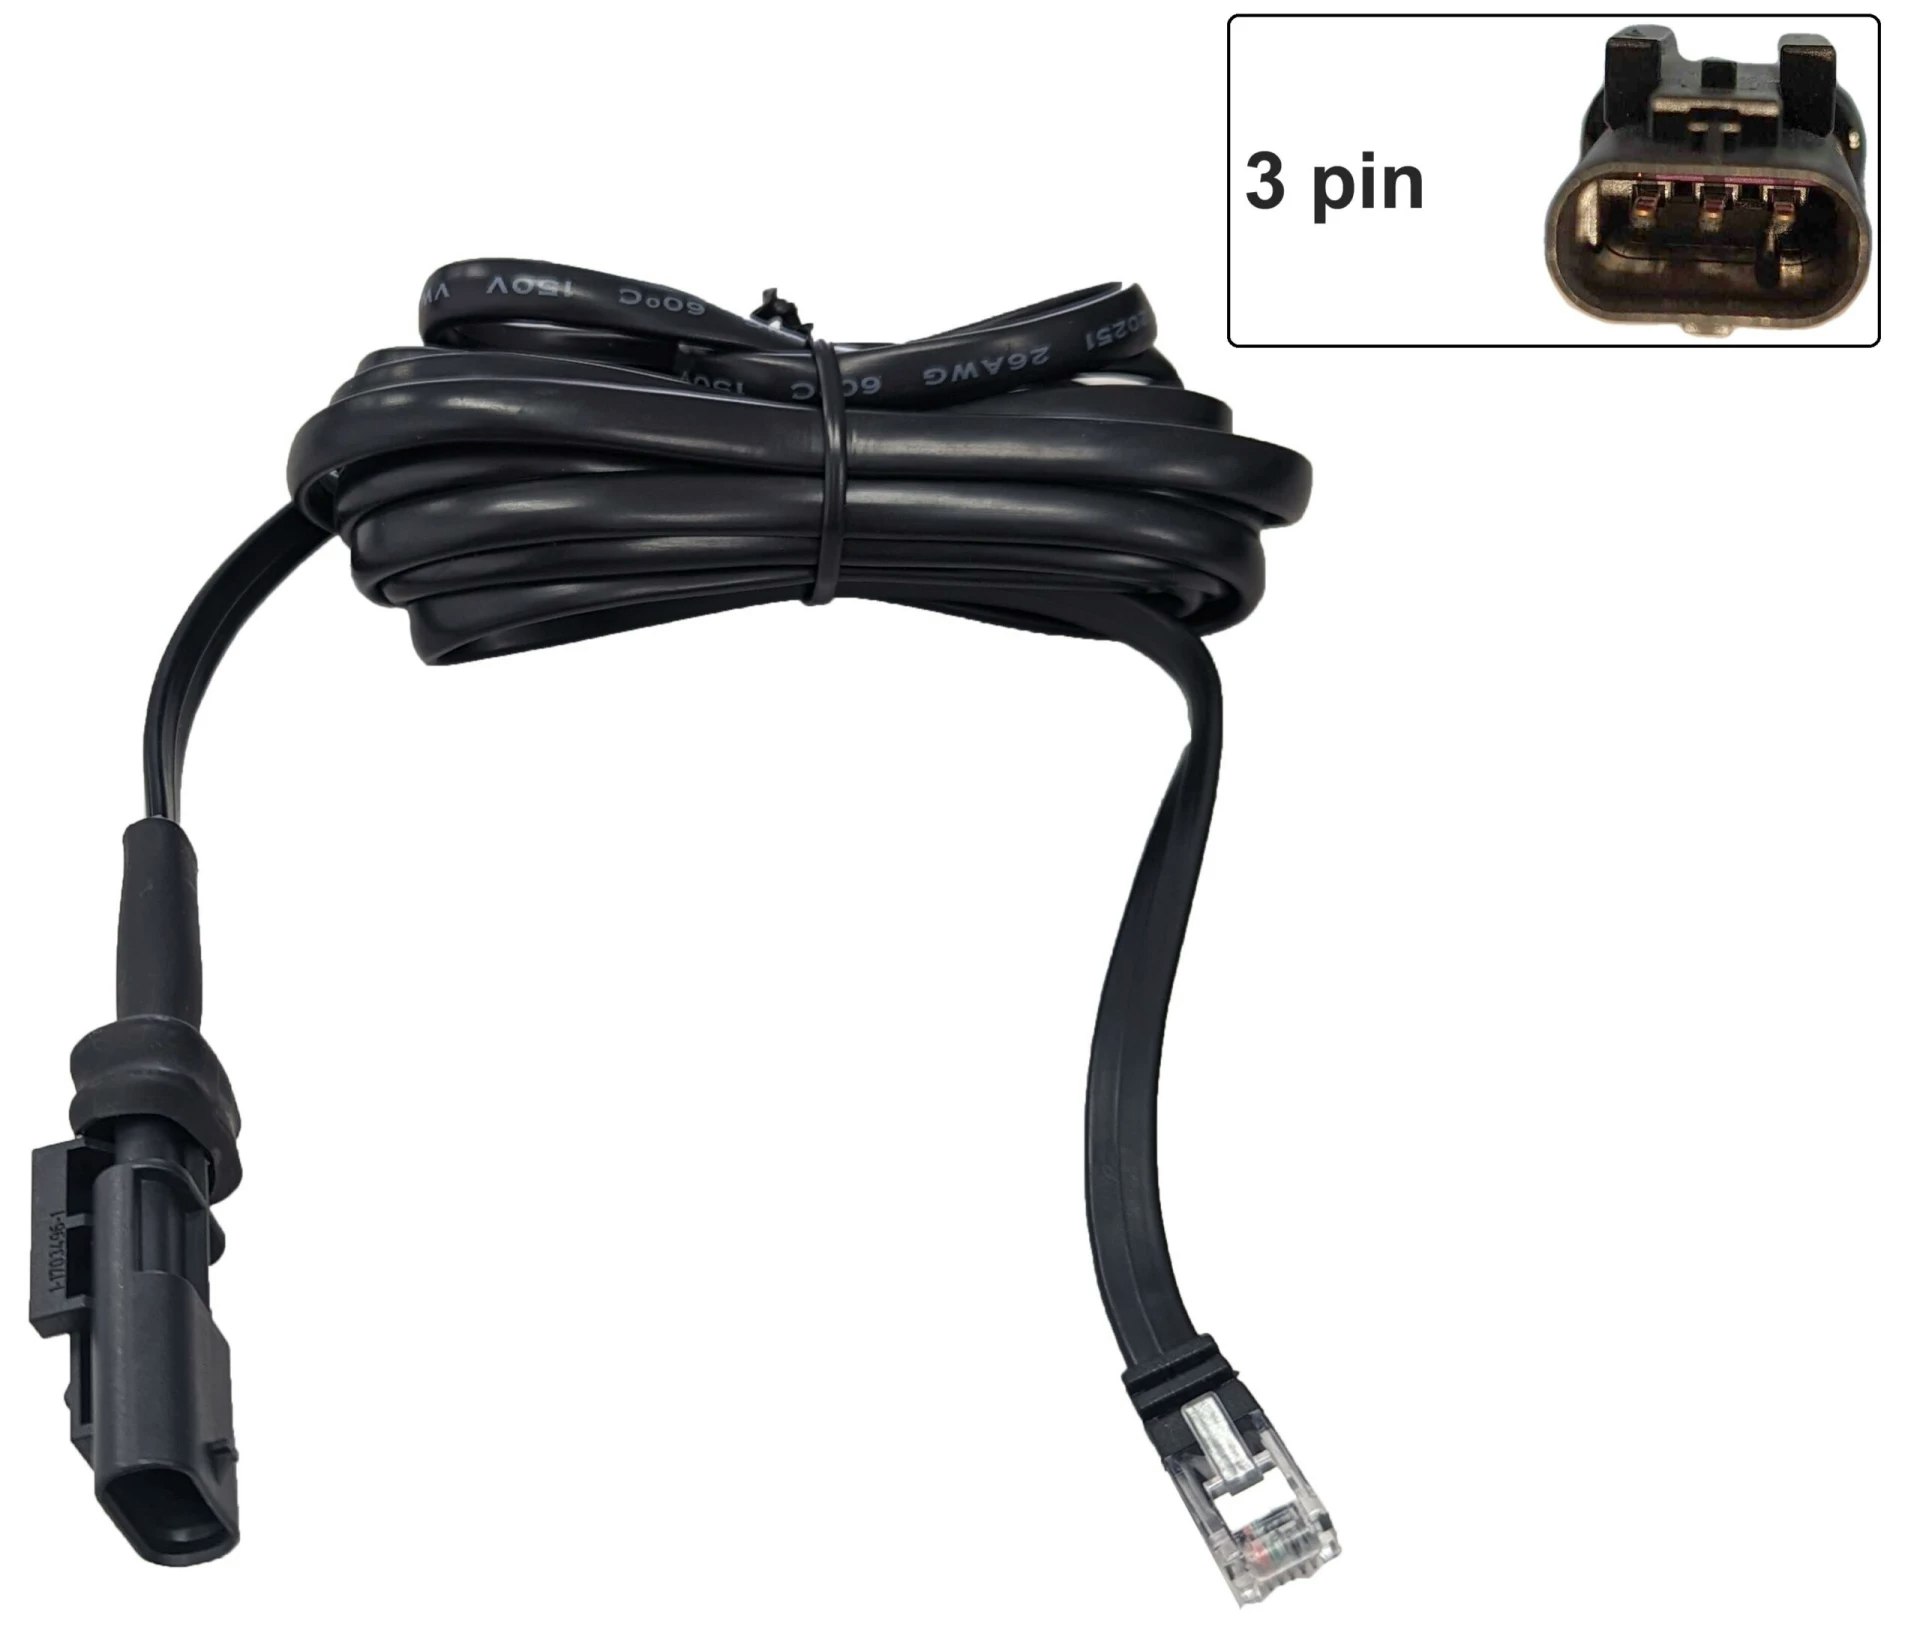 VW & Hyundai OEM Drive Mode Factory Control 3 pin Harness